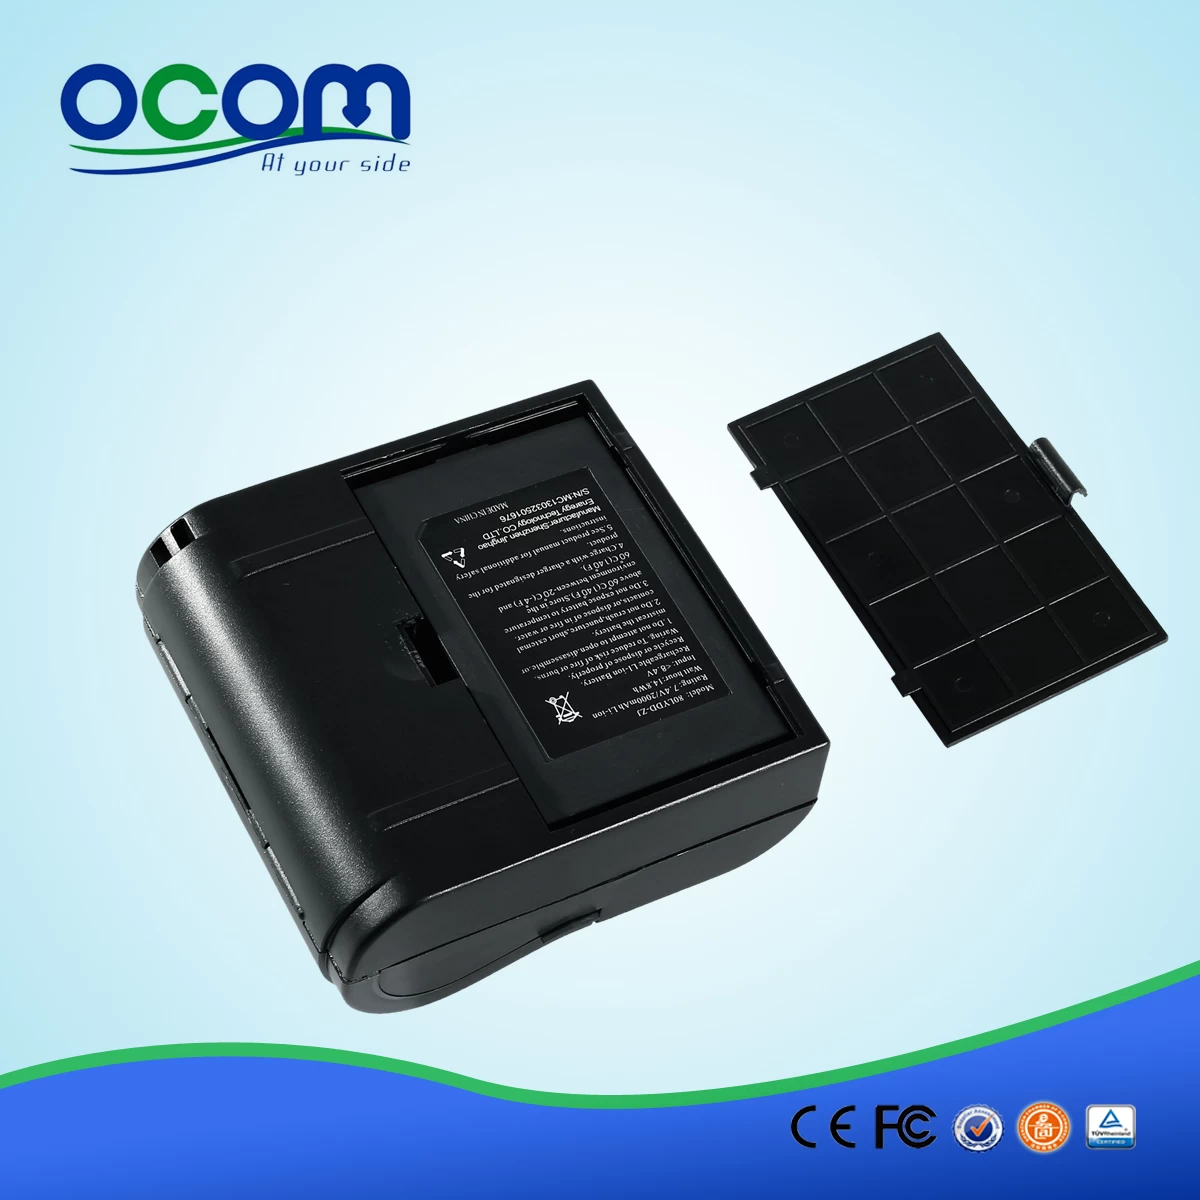 Bluetooth Printer 80mm Mobile OCPP-M082